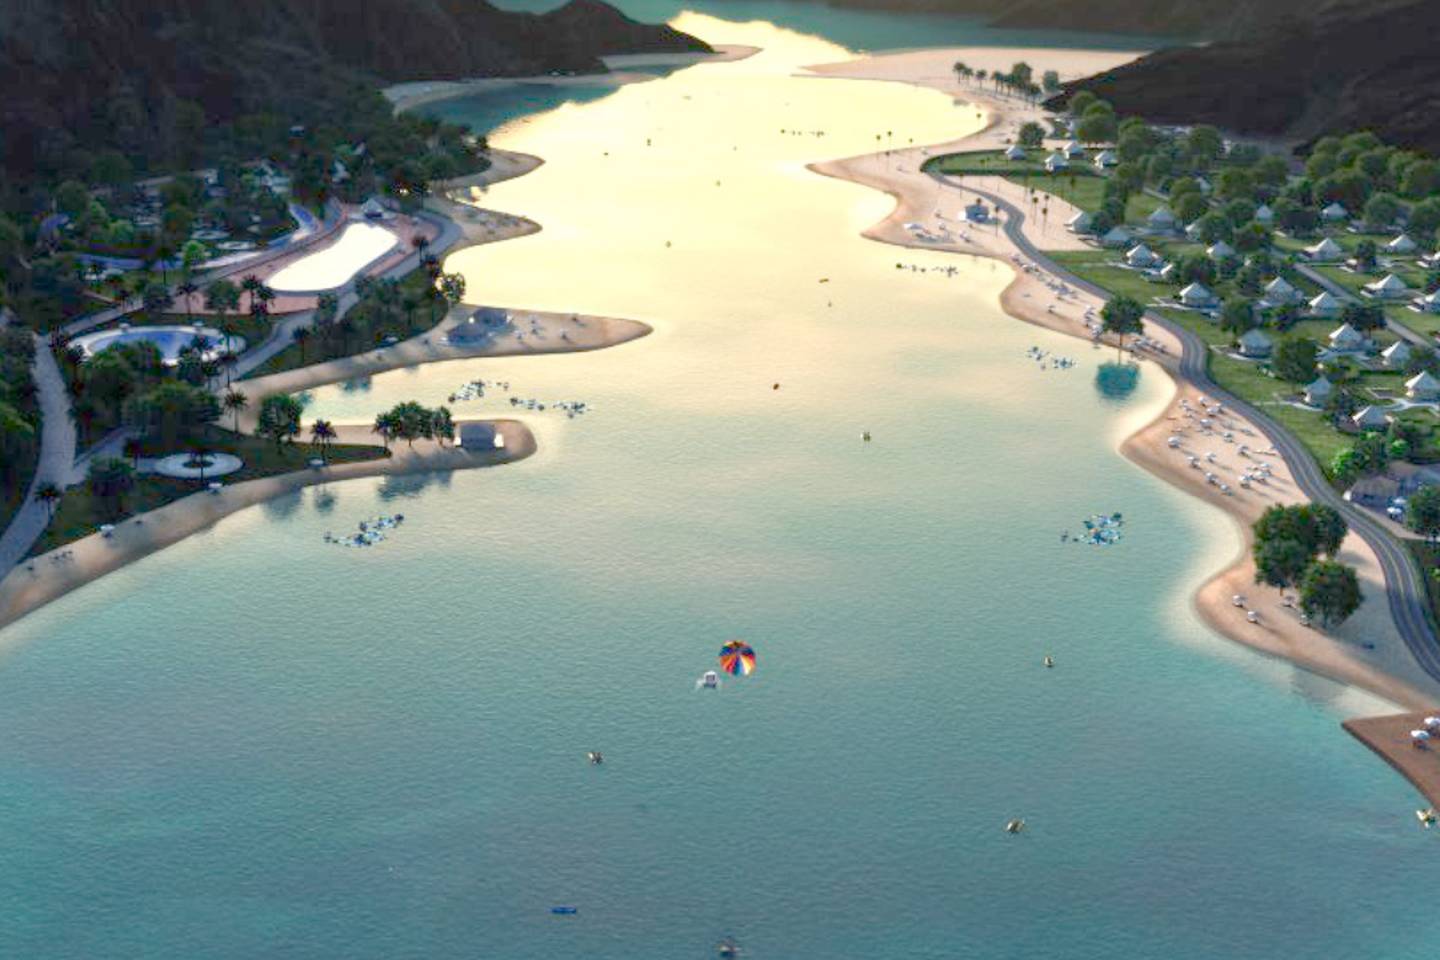 Sheikh Mohammed bin Rashid unveils Hatta's beach and mountain railway plan